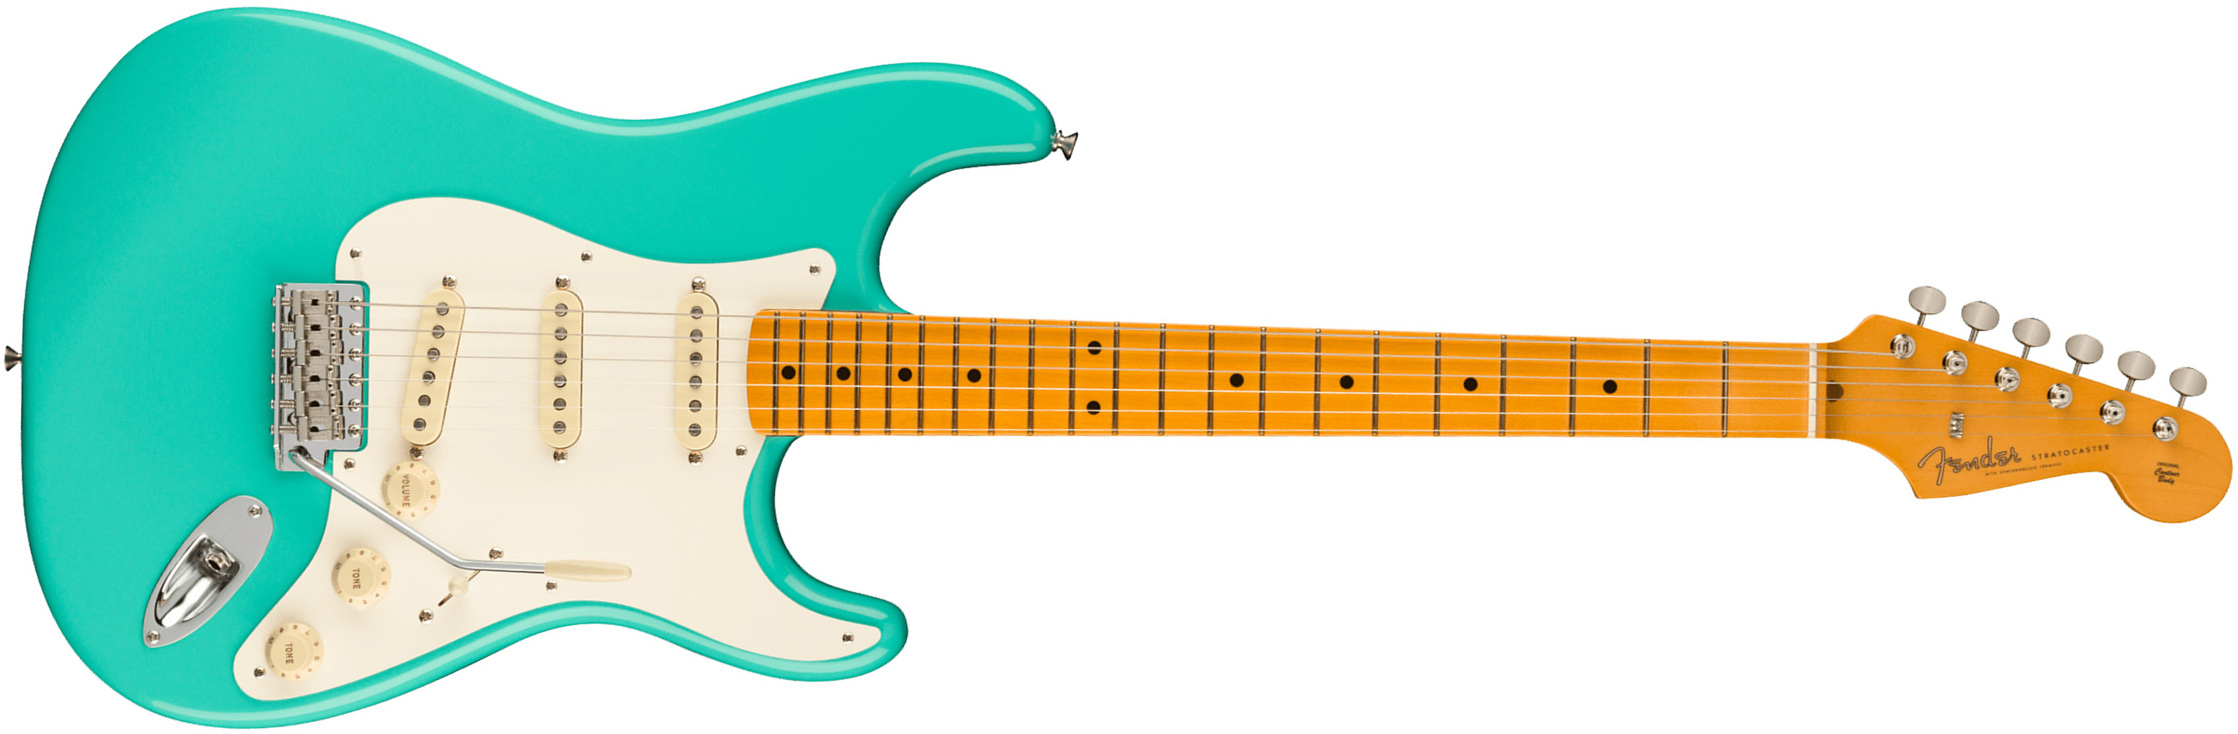 Fender Strat 1957 American Vintage Ii Usa 3s Trem Mn - Sea Foam Green - Elektrische gitaar in Str-vorm - Main picture